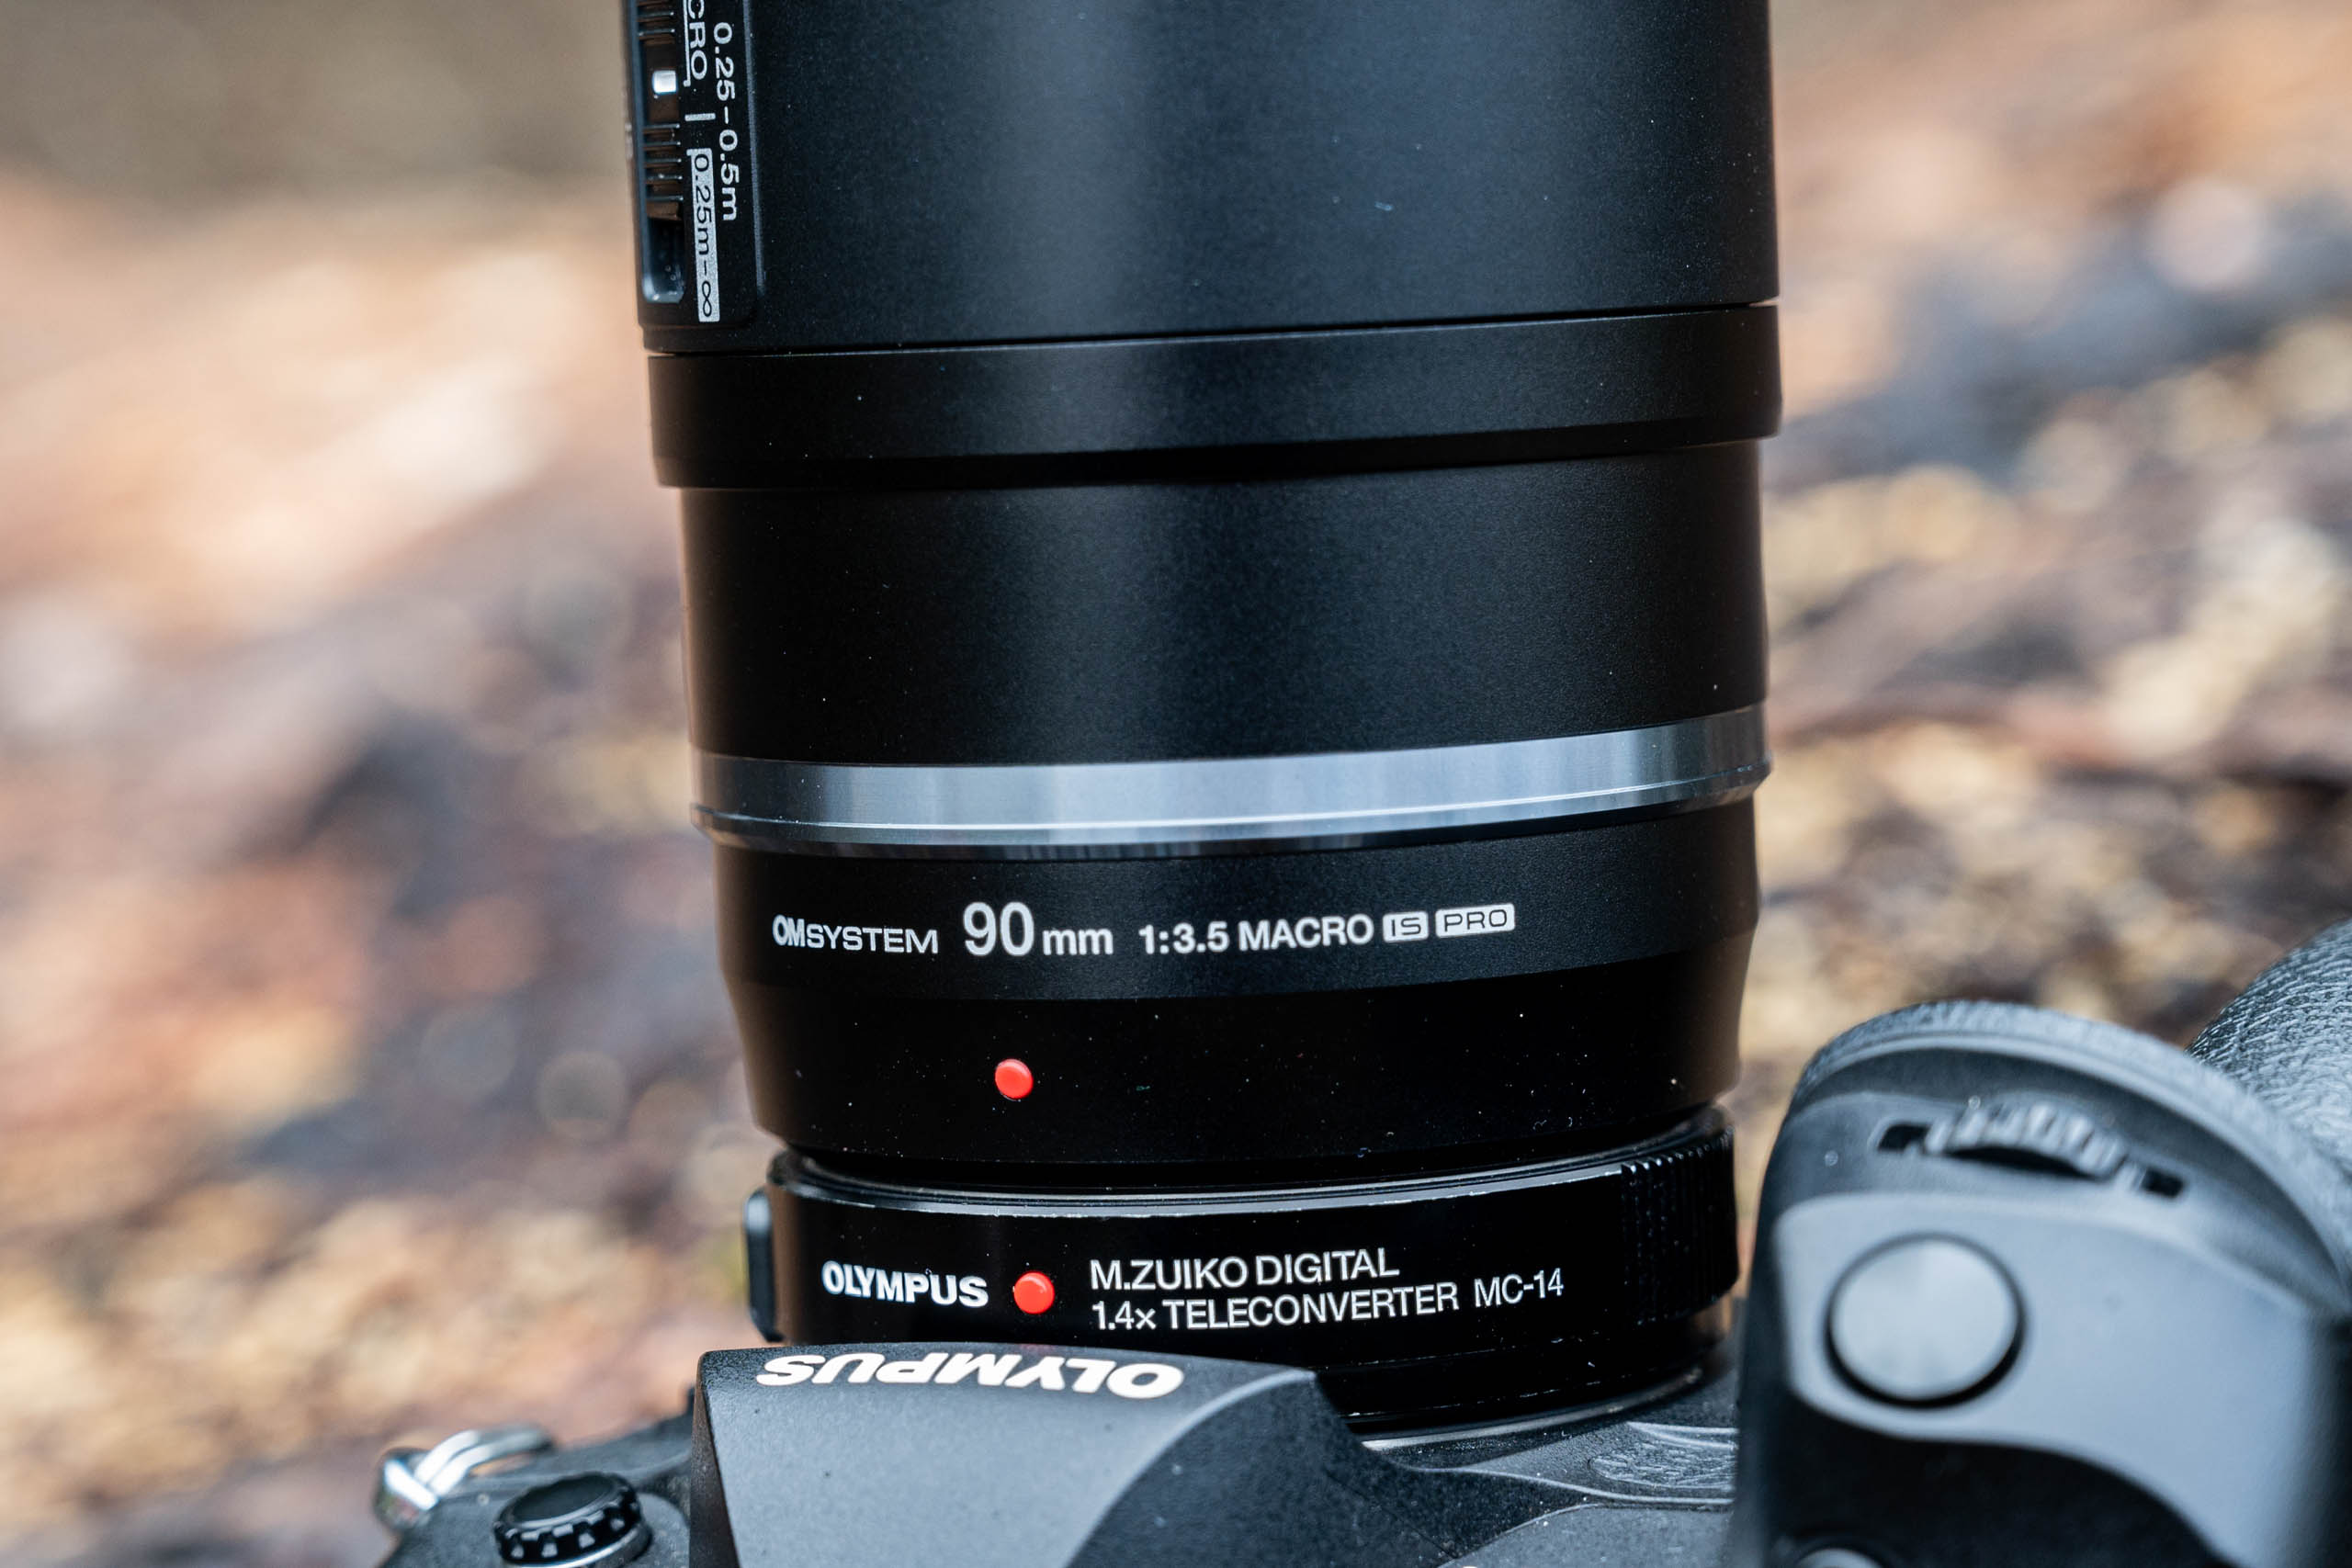 OM System M.Zuiko Lens IS Review - Macro F3.5 Amateur 90mm ED Photographer PRO